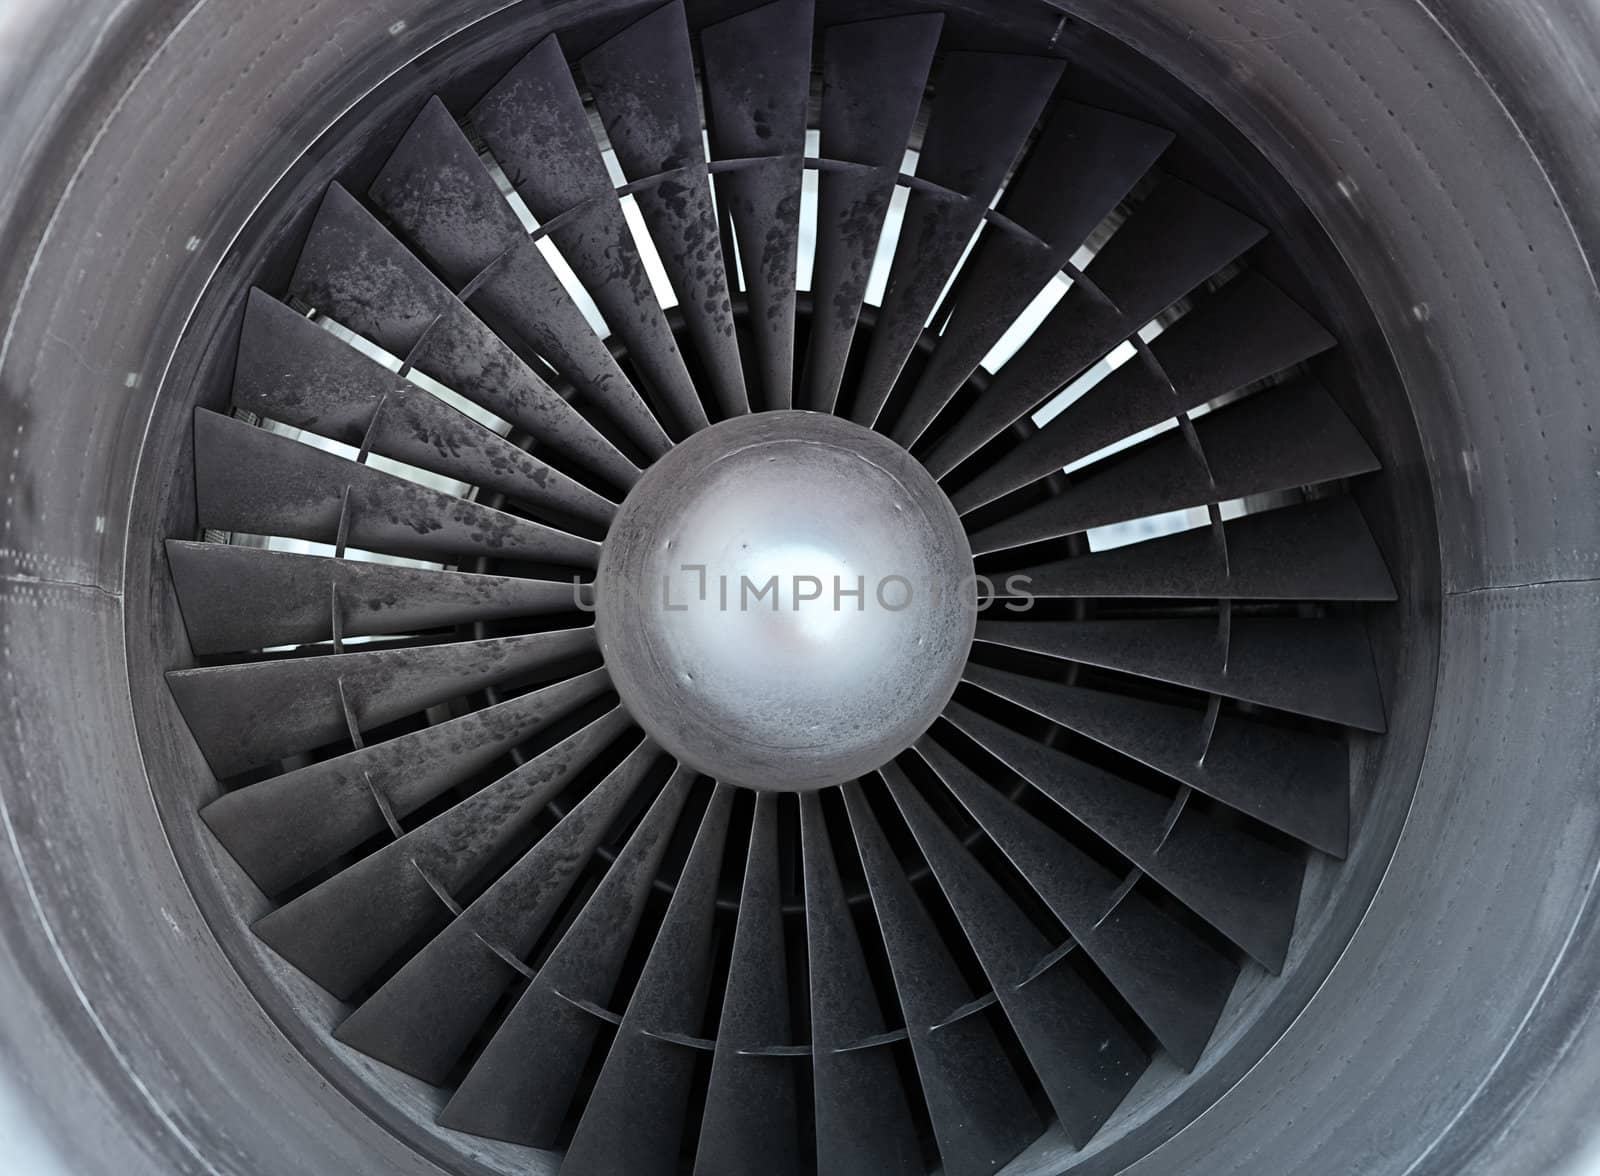 Turbine of airplane, closeup